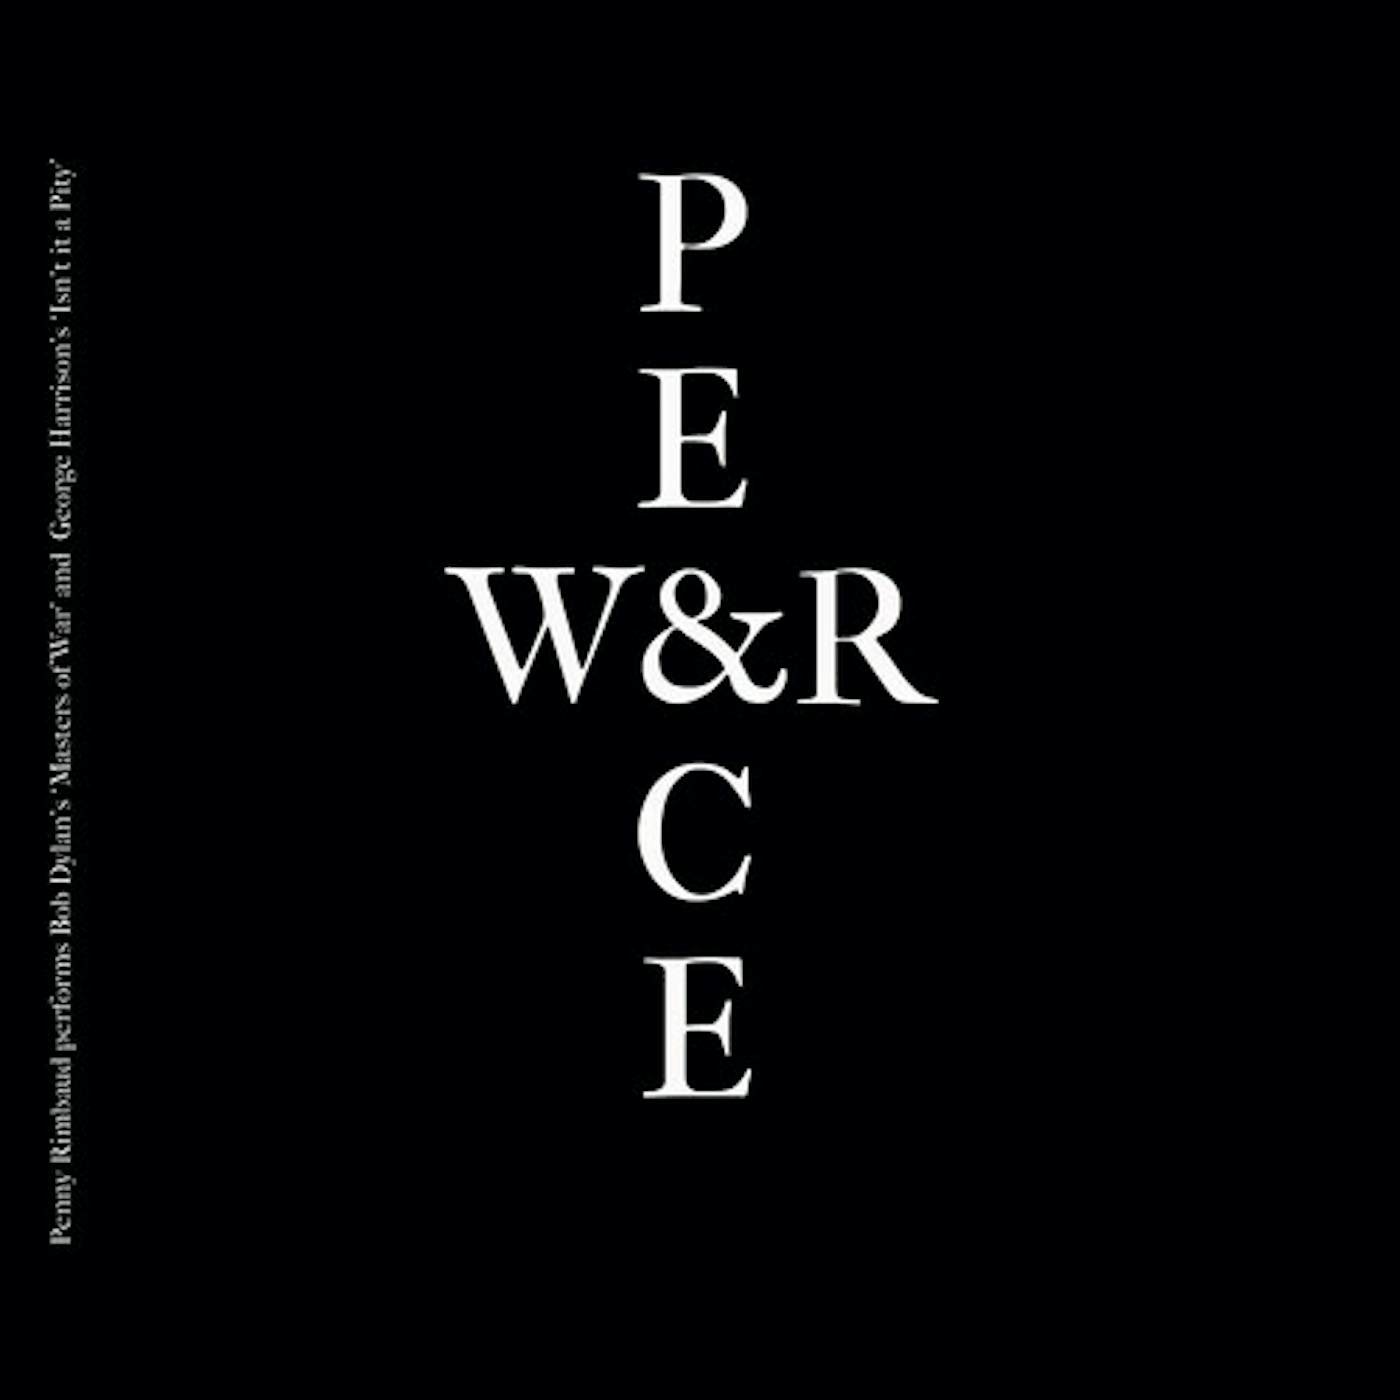 Penny Rimbaud War & Peace Vinyl Record